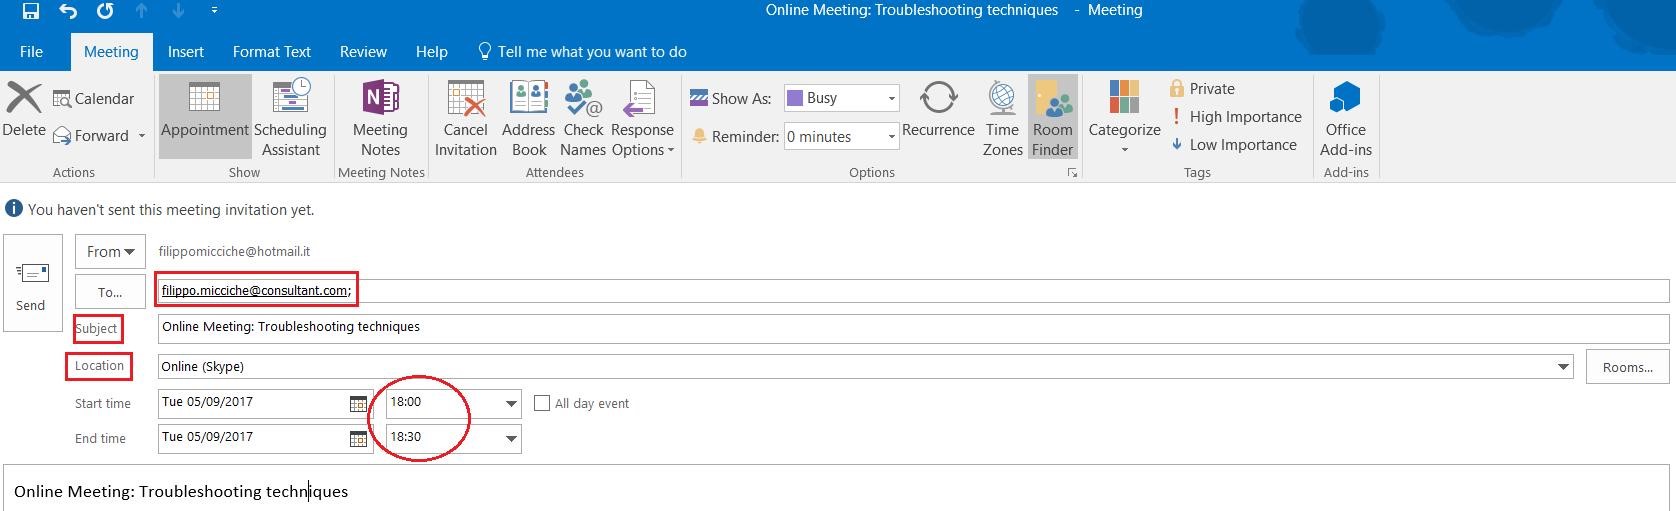 Outlook Calendar: New meeting image 2